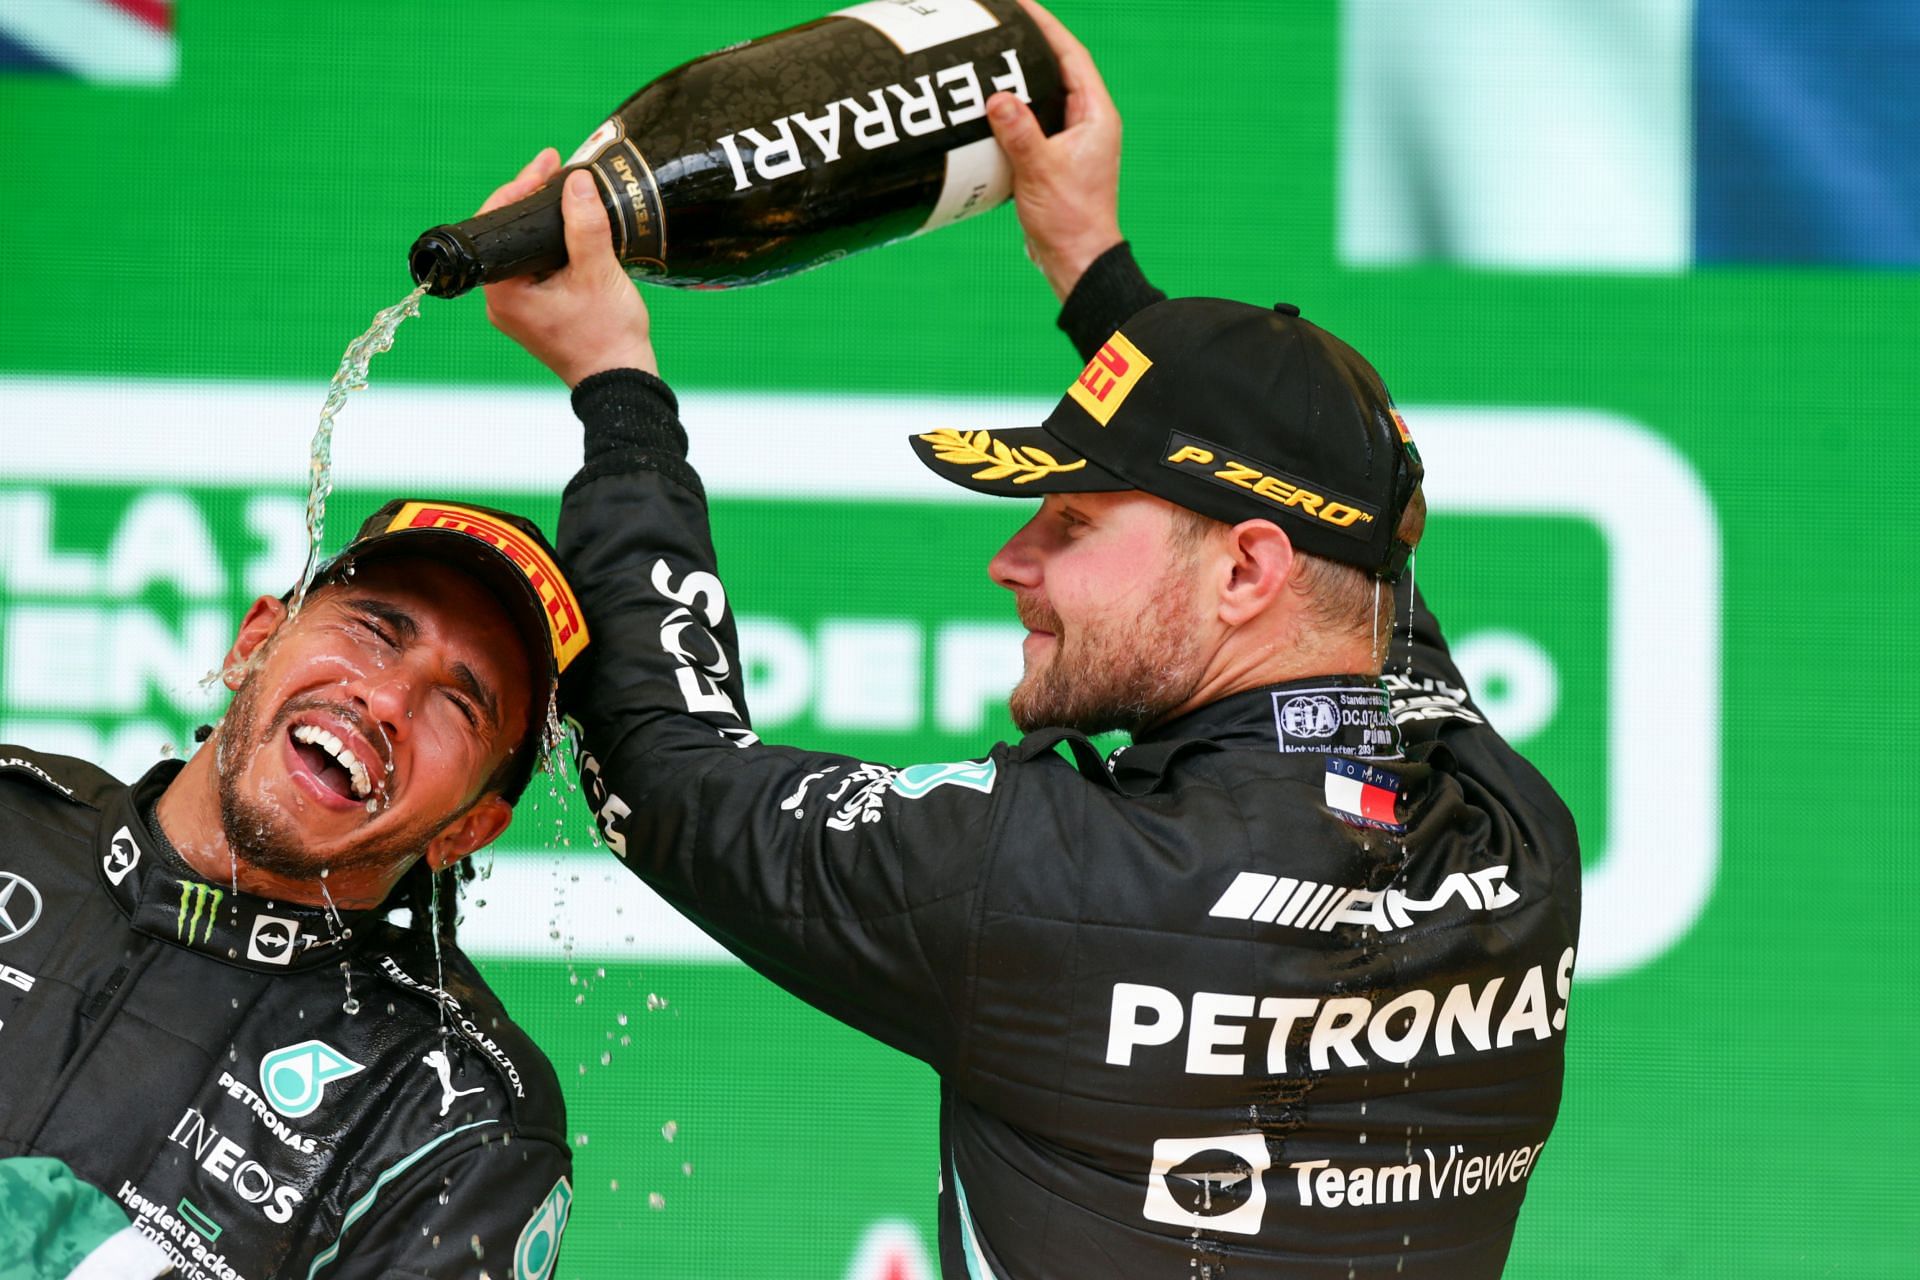 F1 Grand Prix of Brazil - Lewis Hamilton (left) and Valtteri Bottas during podium celebrations